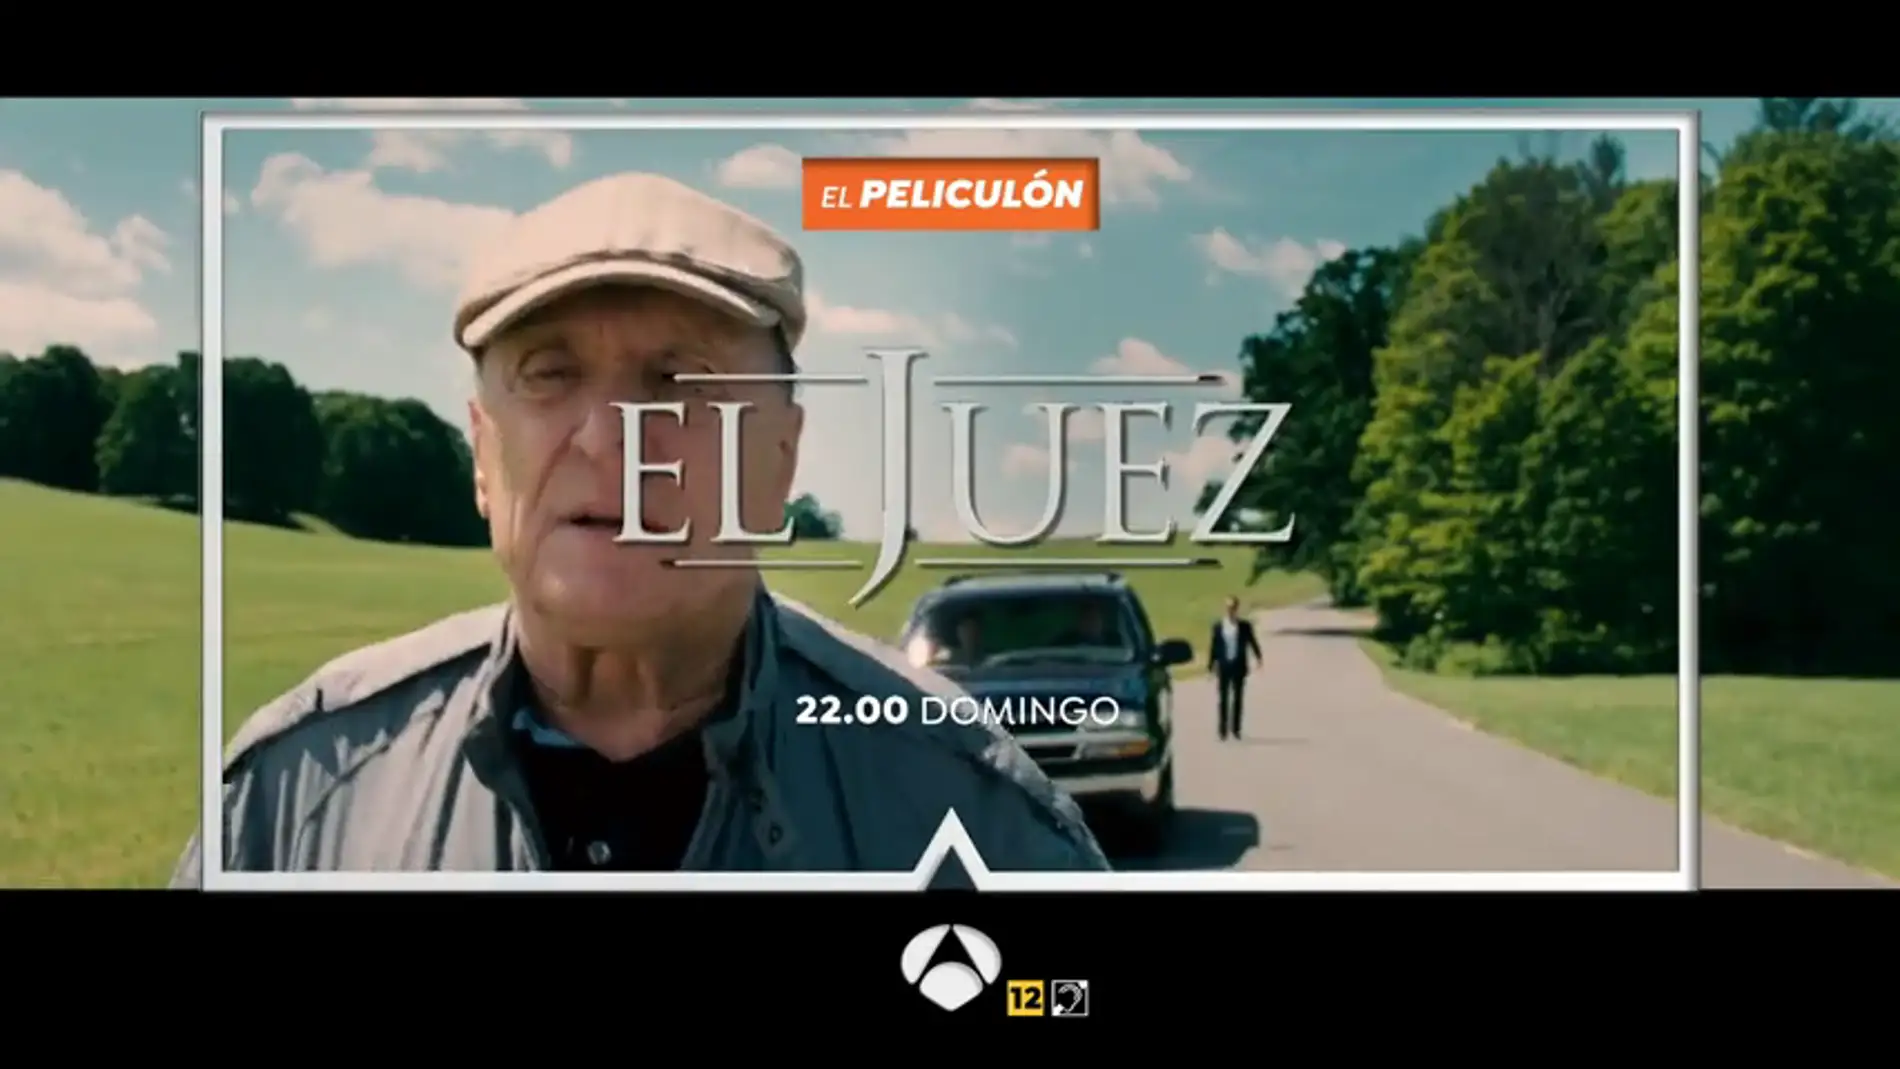 Antena 3 emite 'El juez' con Robert Duvall